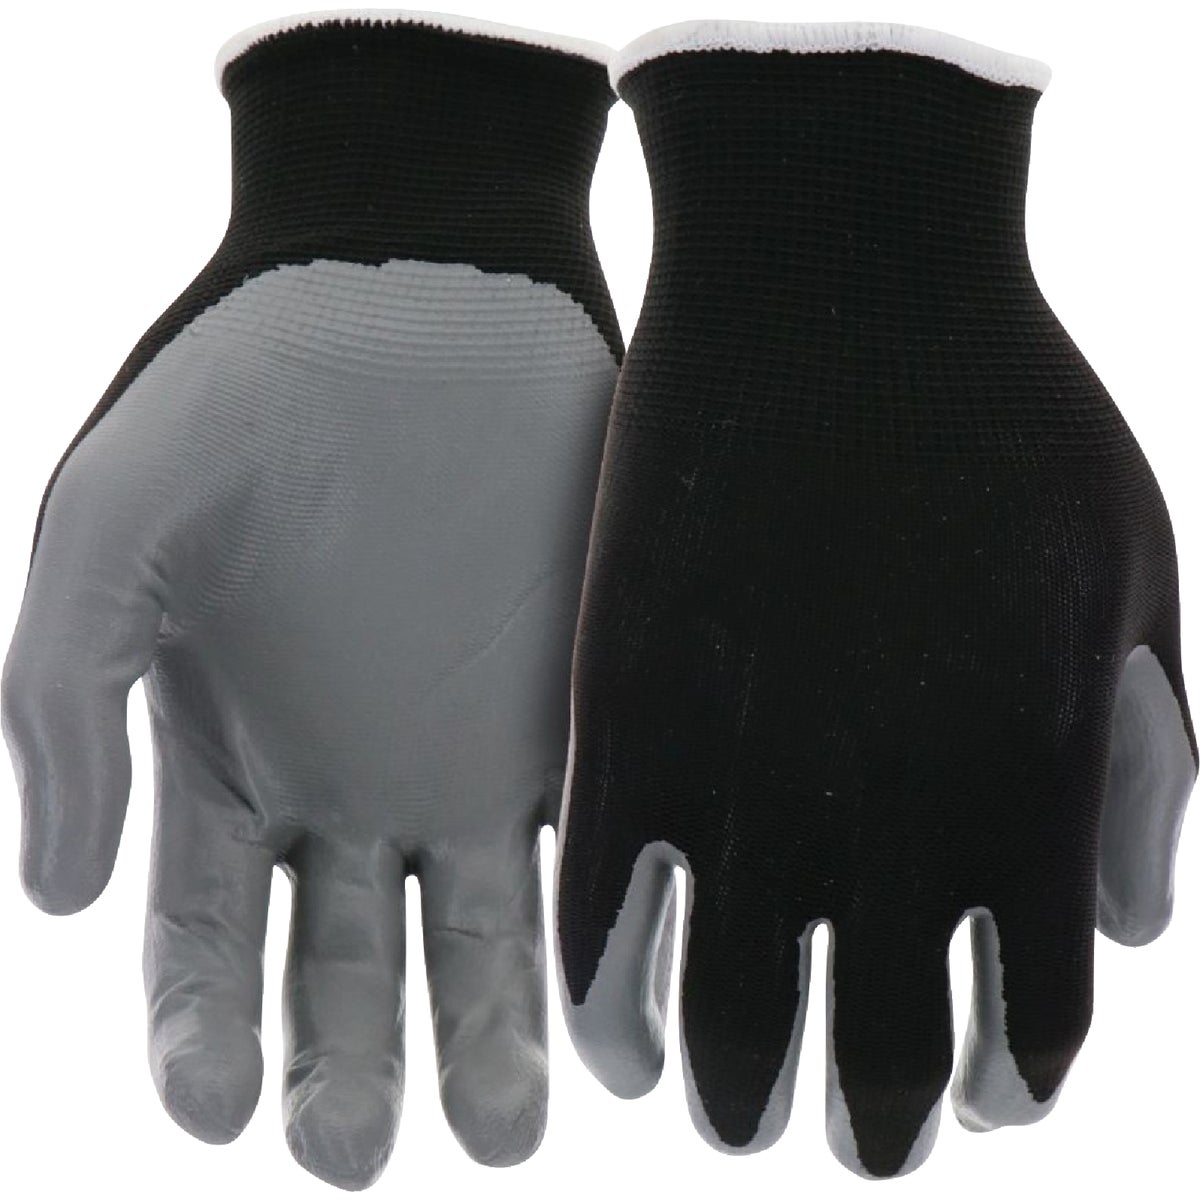 Item 703457, Durable nitrile coated nylon gloves.